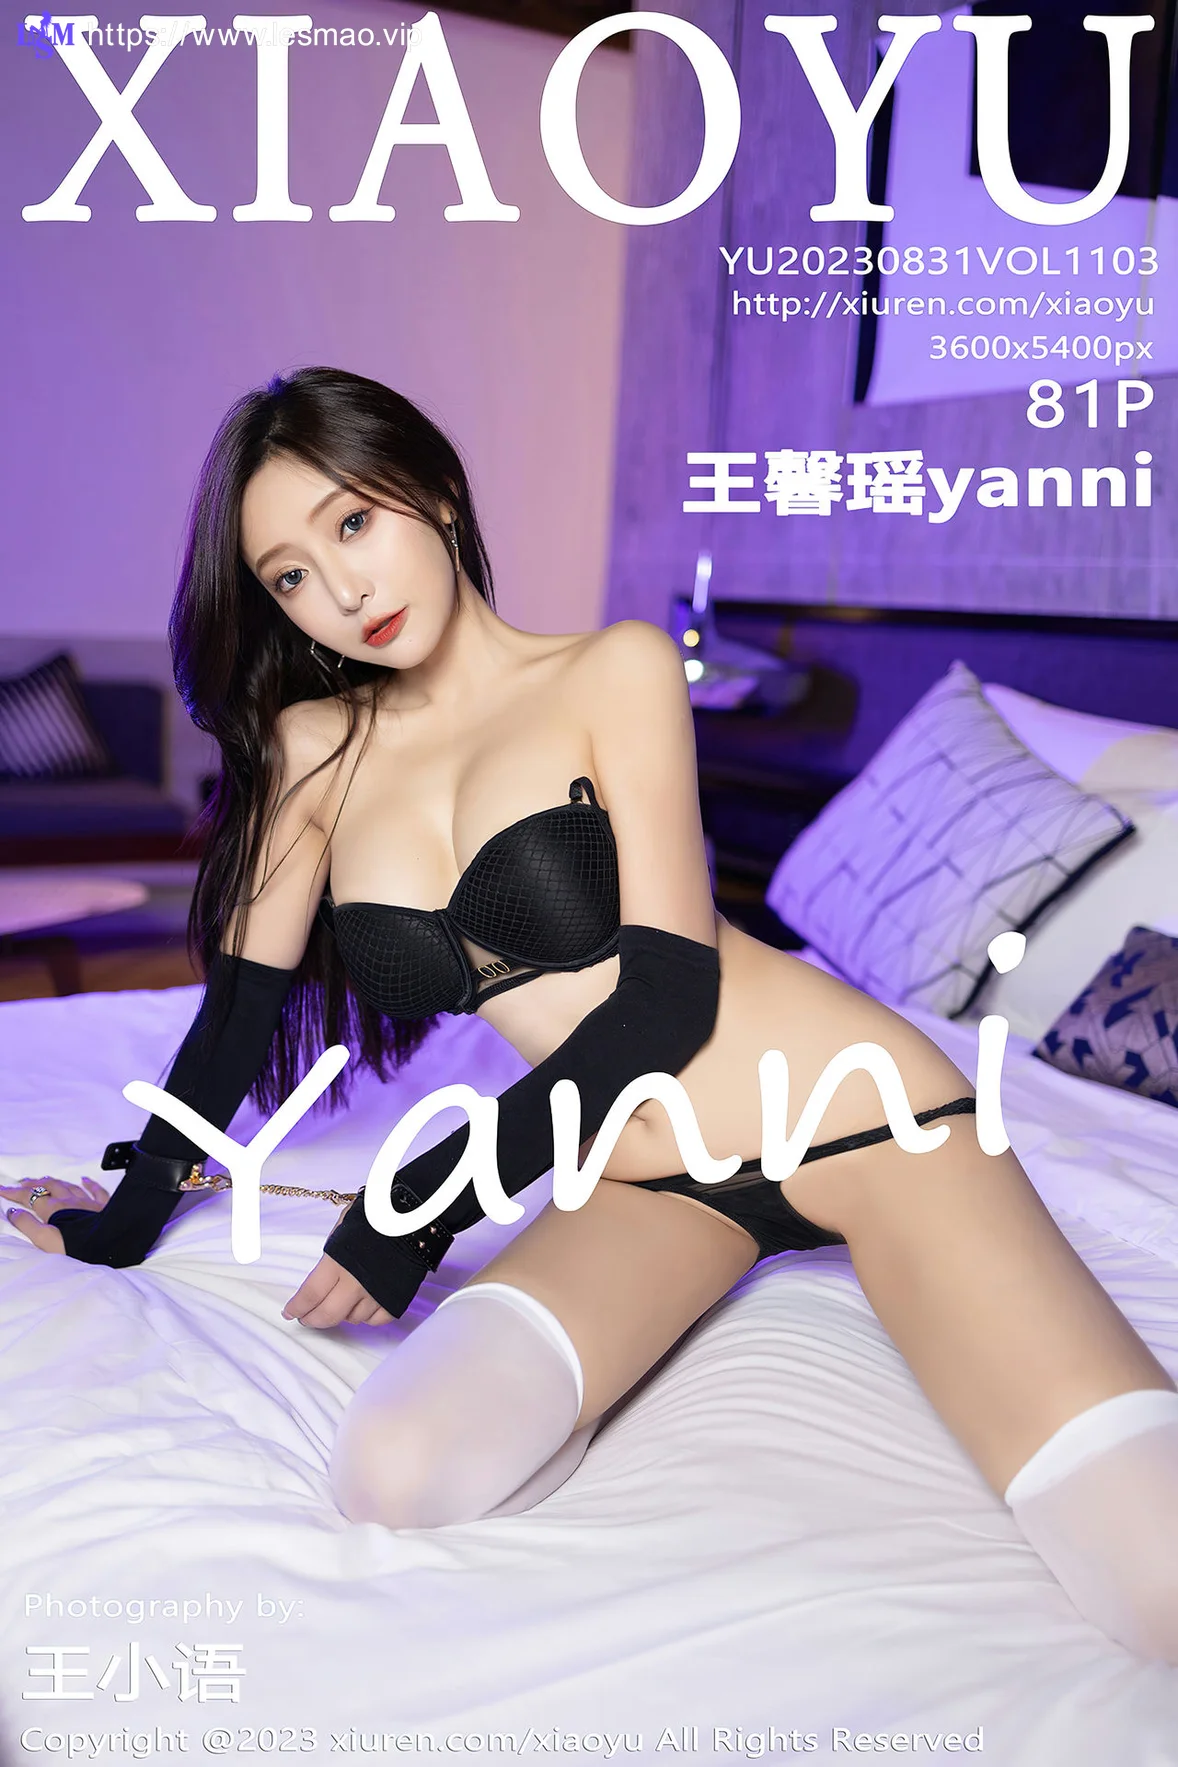 XIAOYU  语画  Vol.1103  王馨瑶yanni 白色水手制服性感写真1 - 2